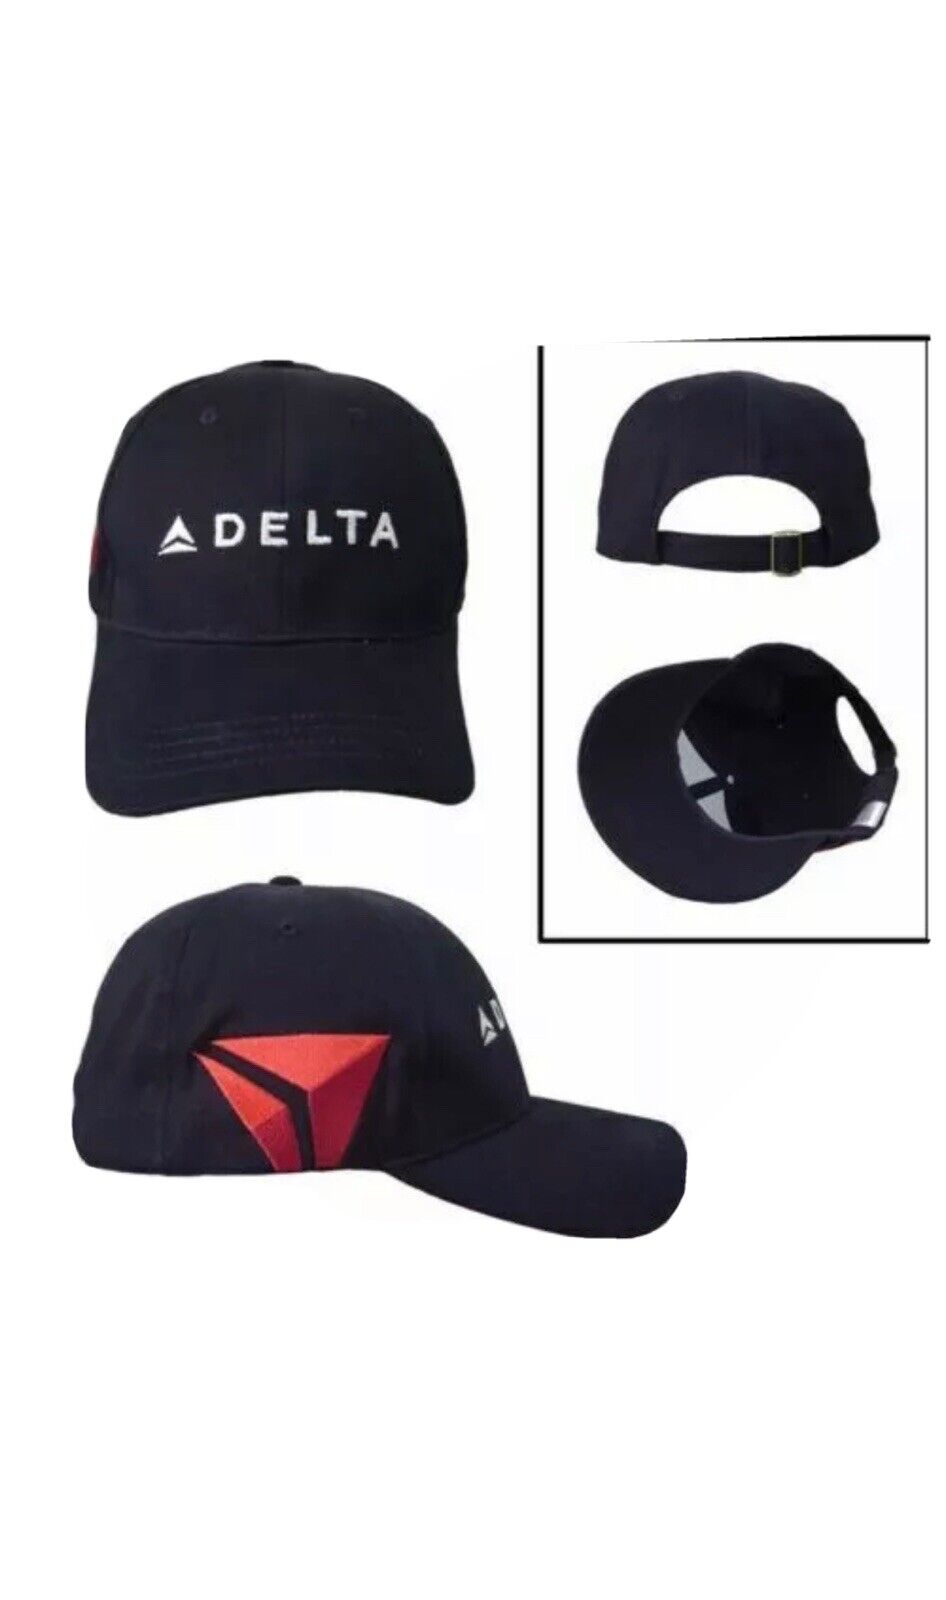 Delta Airlines Black Red White Embroidered Widget Adjustable Baseball Cap Hat